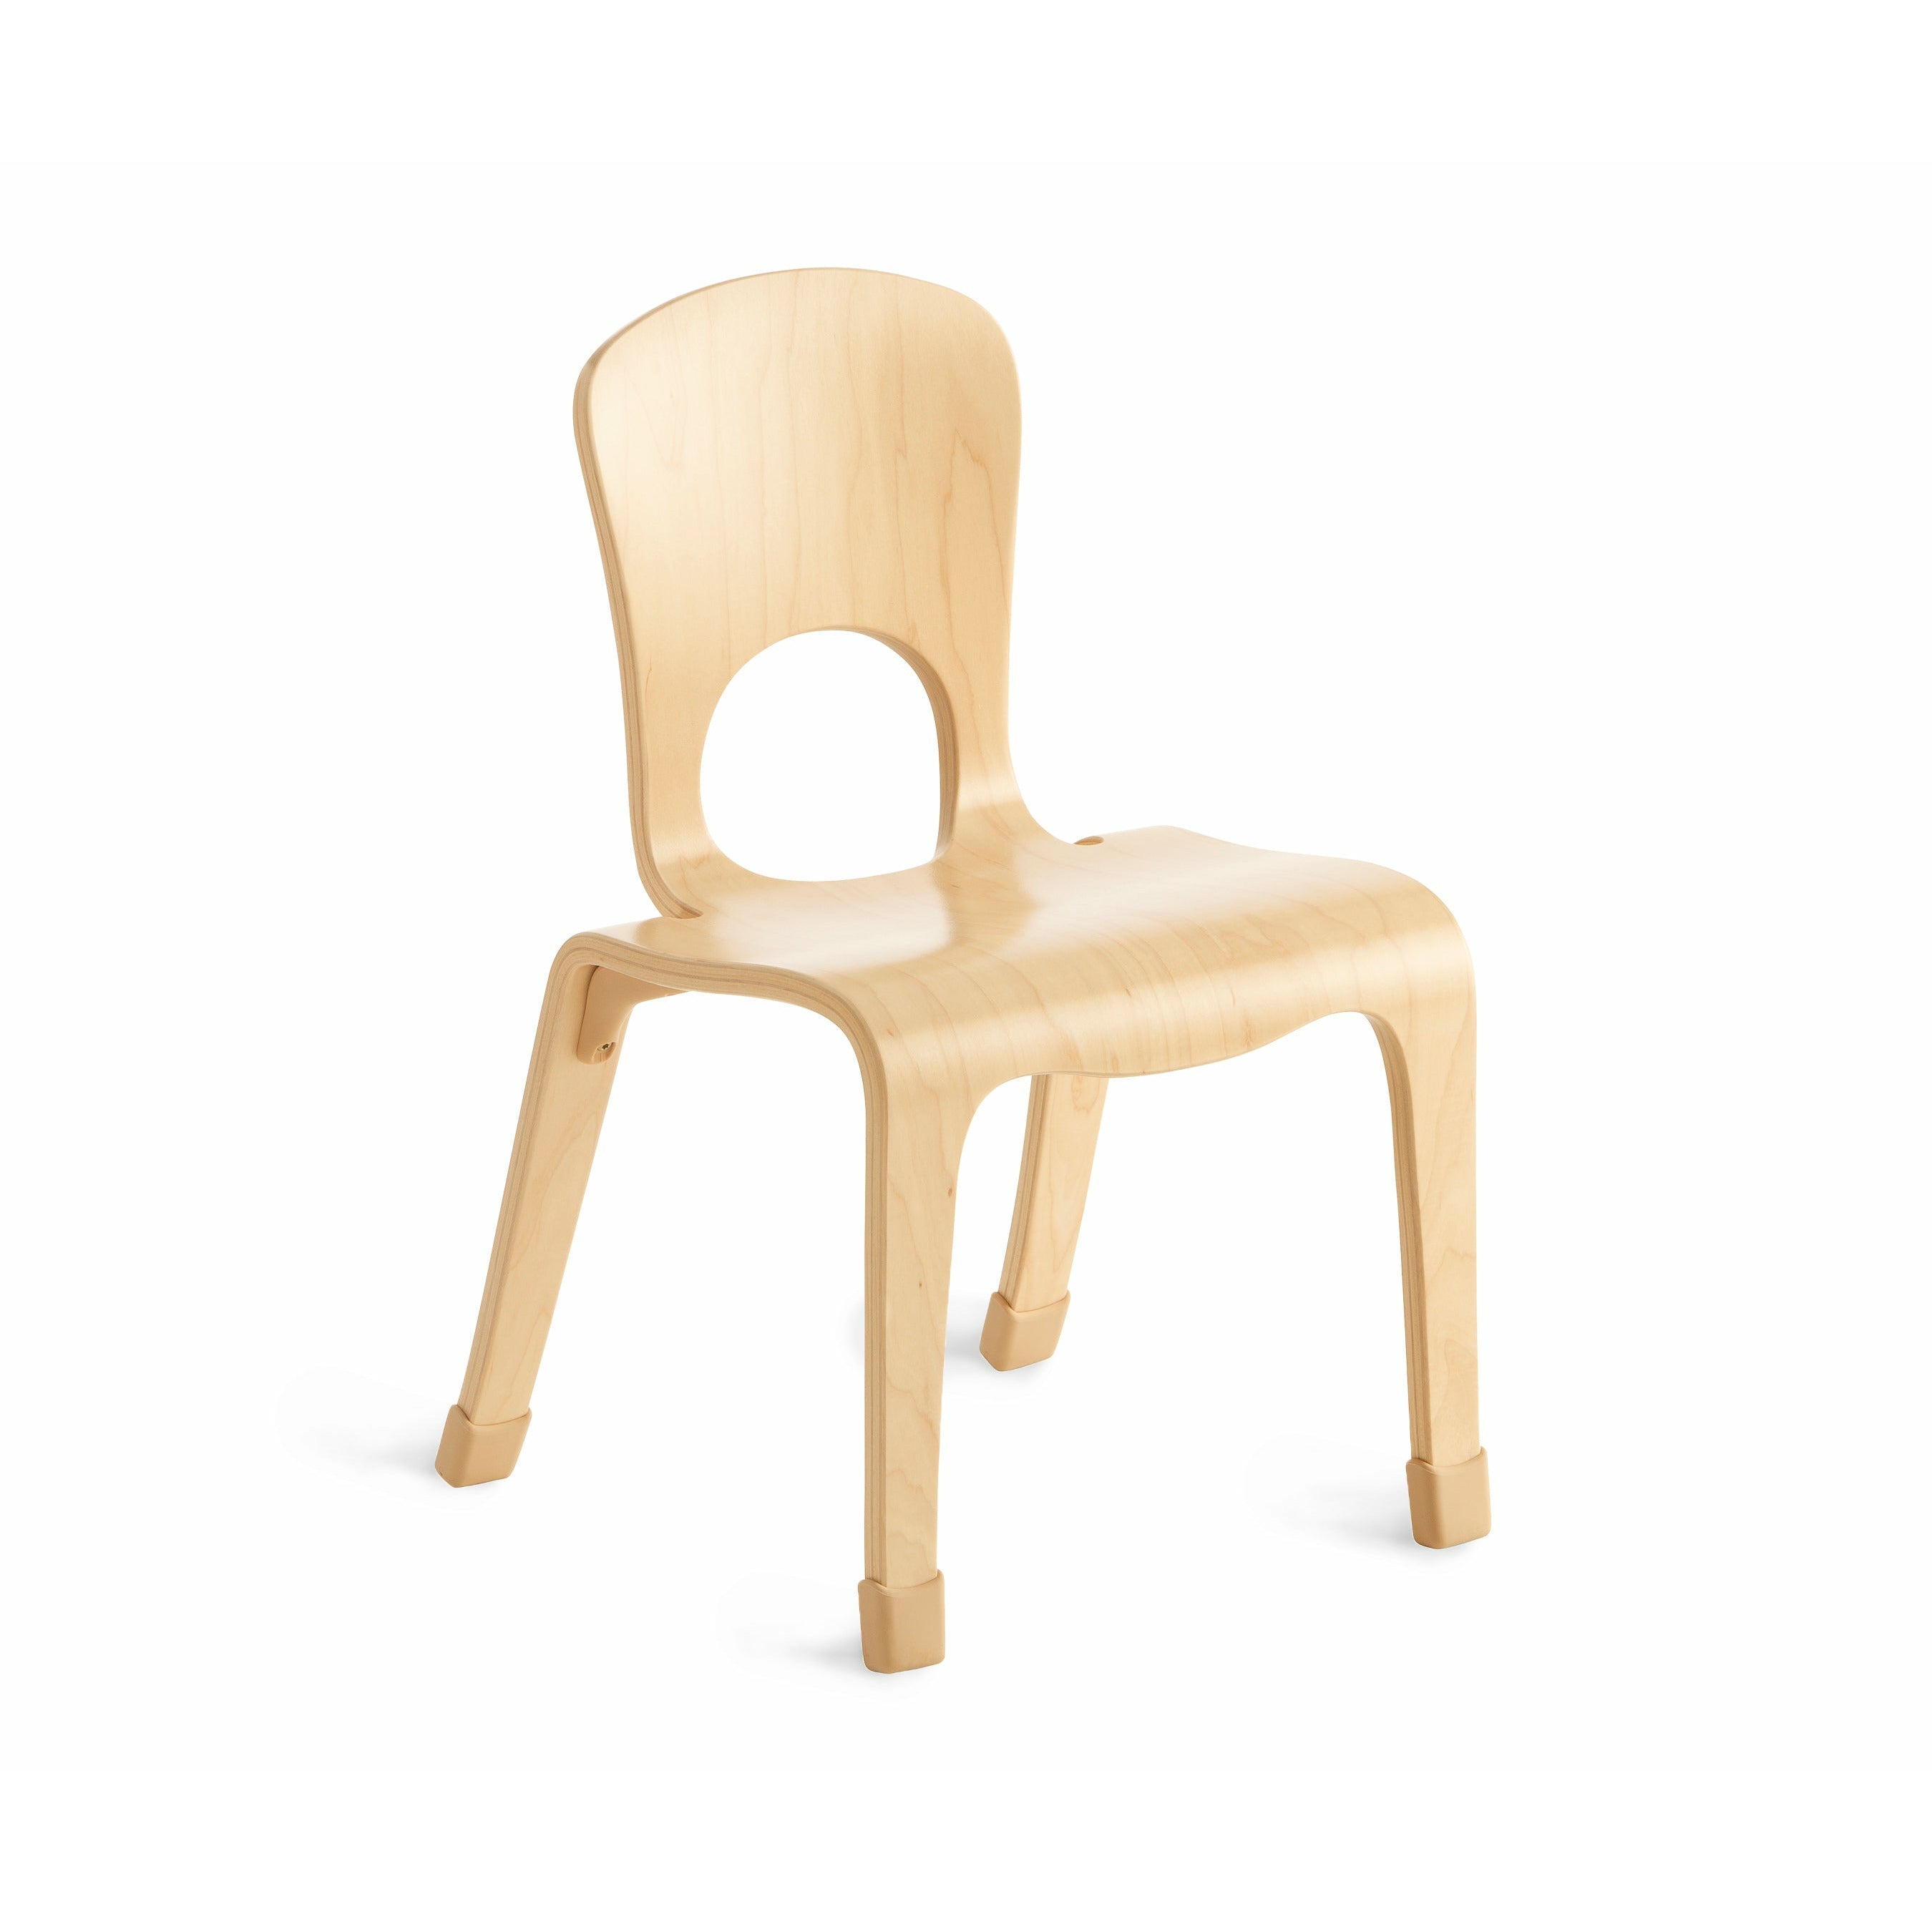 Woodcrest Chair - 12" High